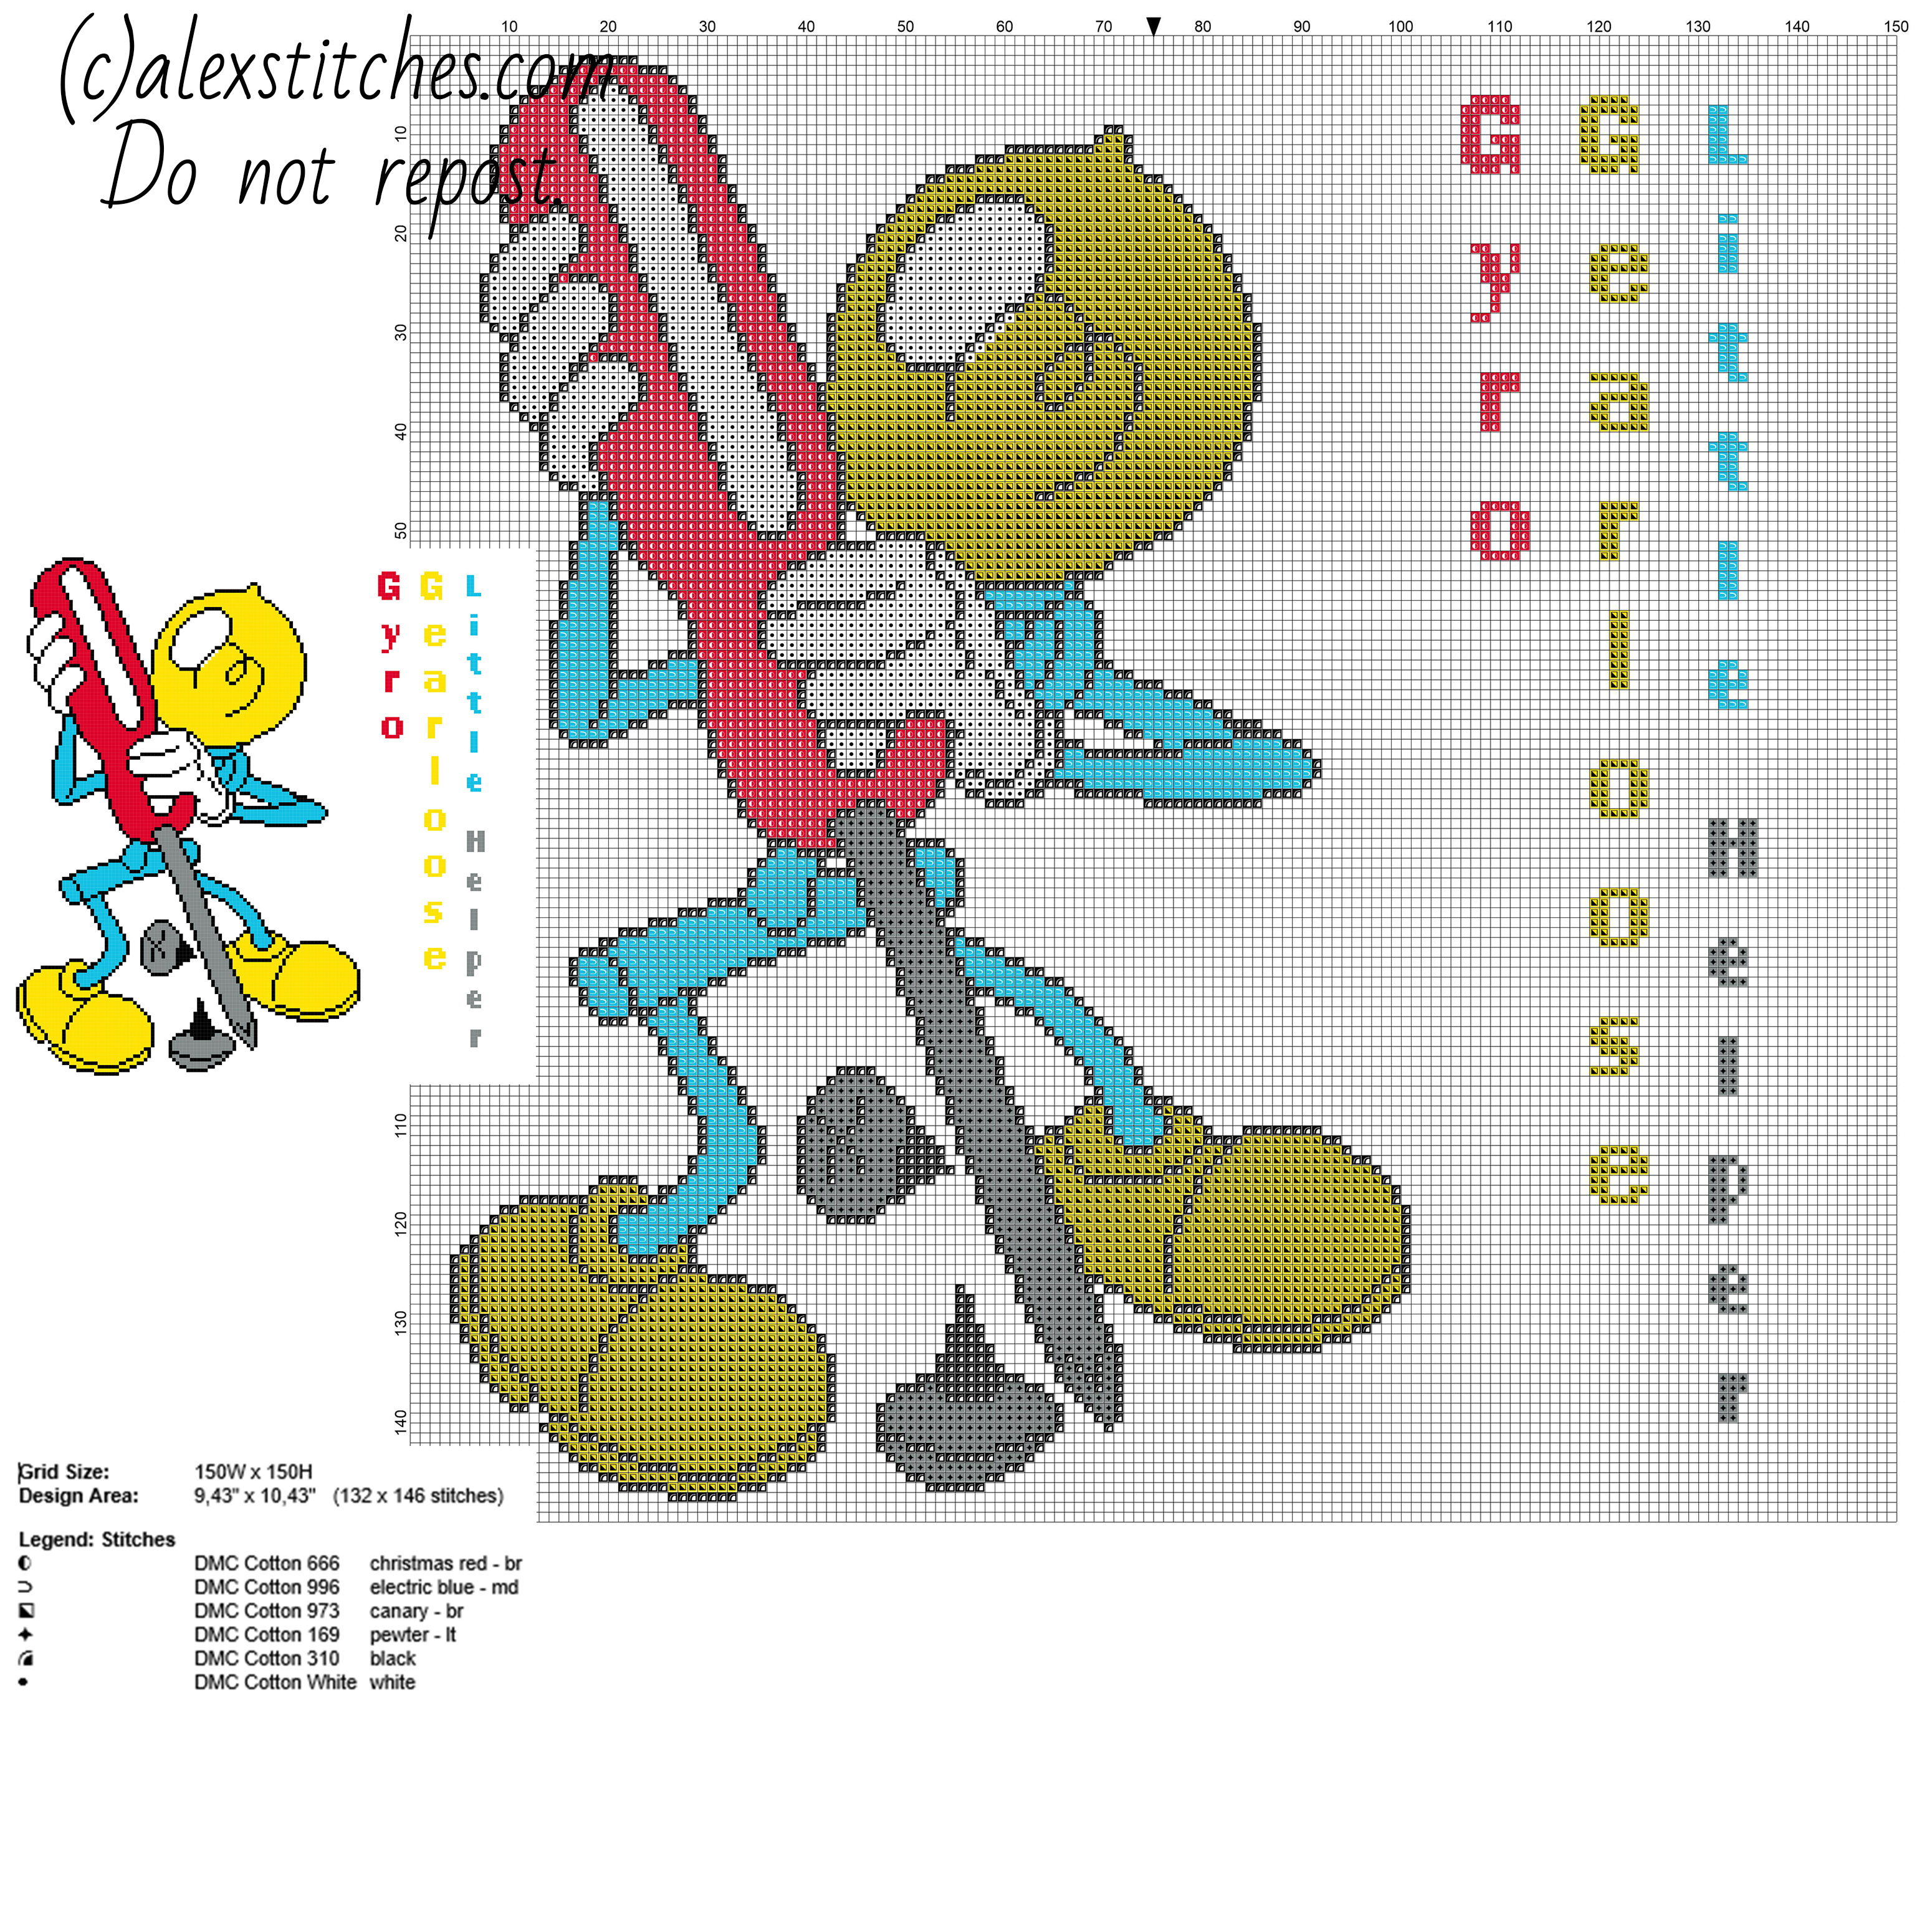 Gyro Gearloose Little Helper Disney Mickey Mouse character cross stitch pattern big size 150 stitches